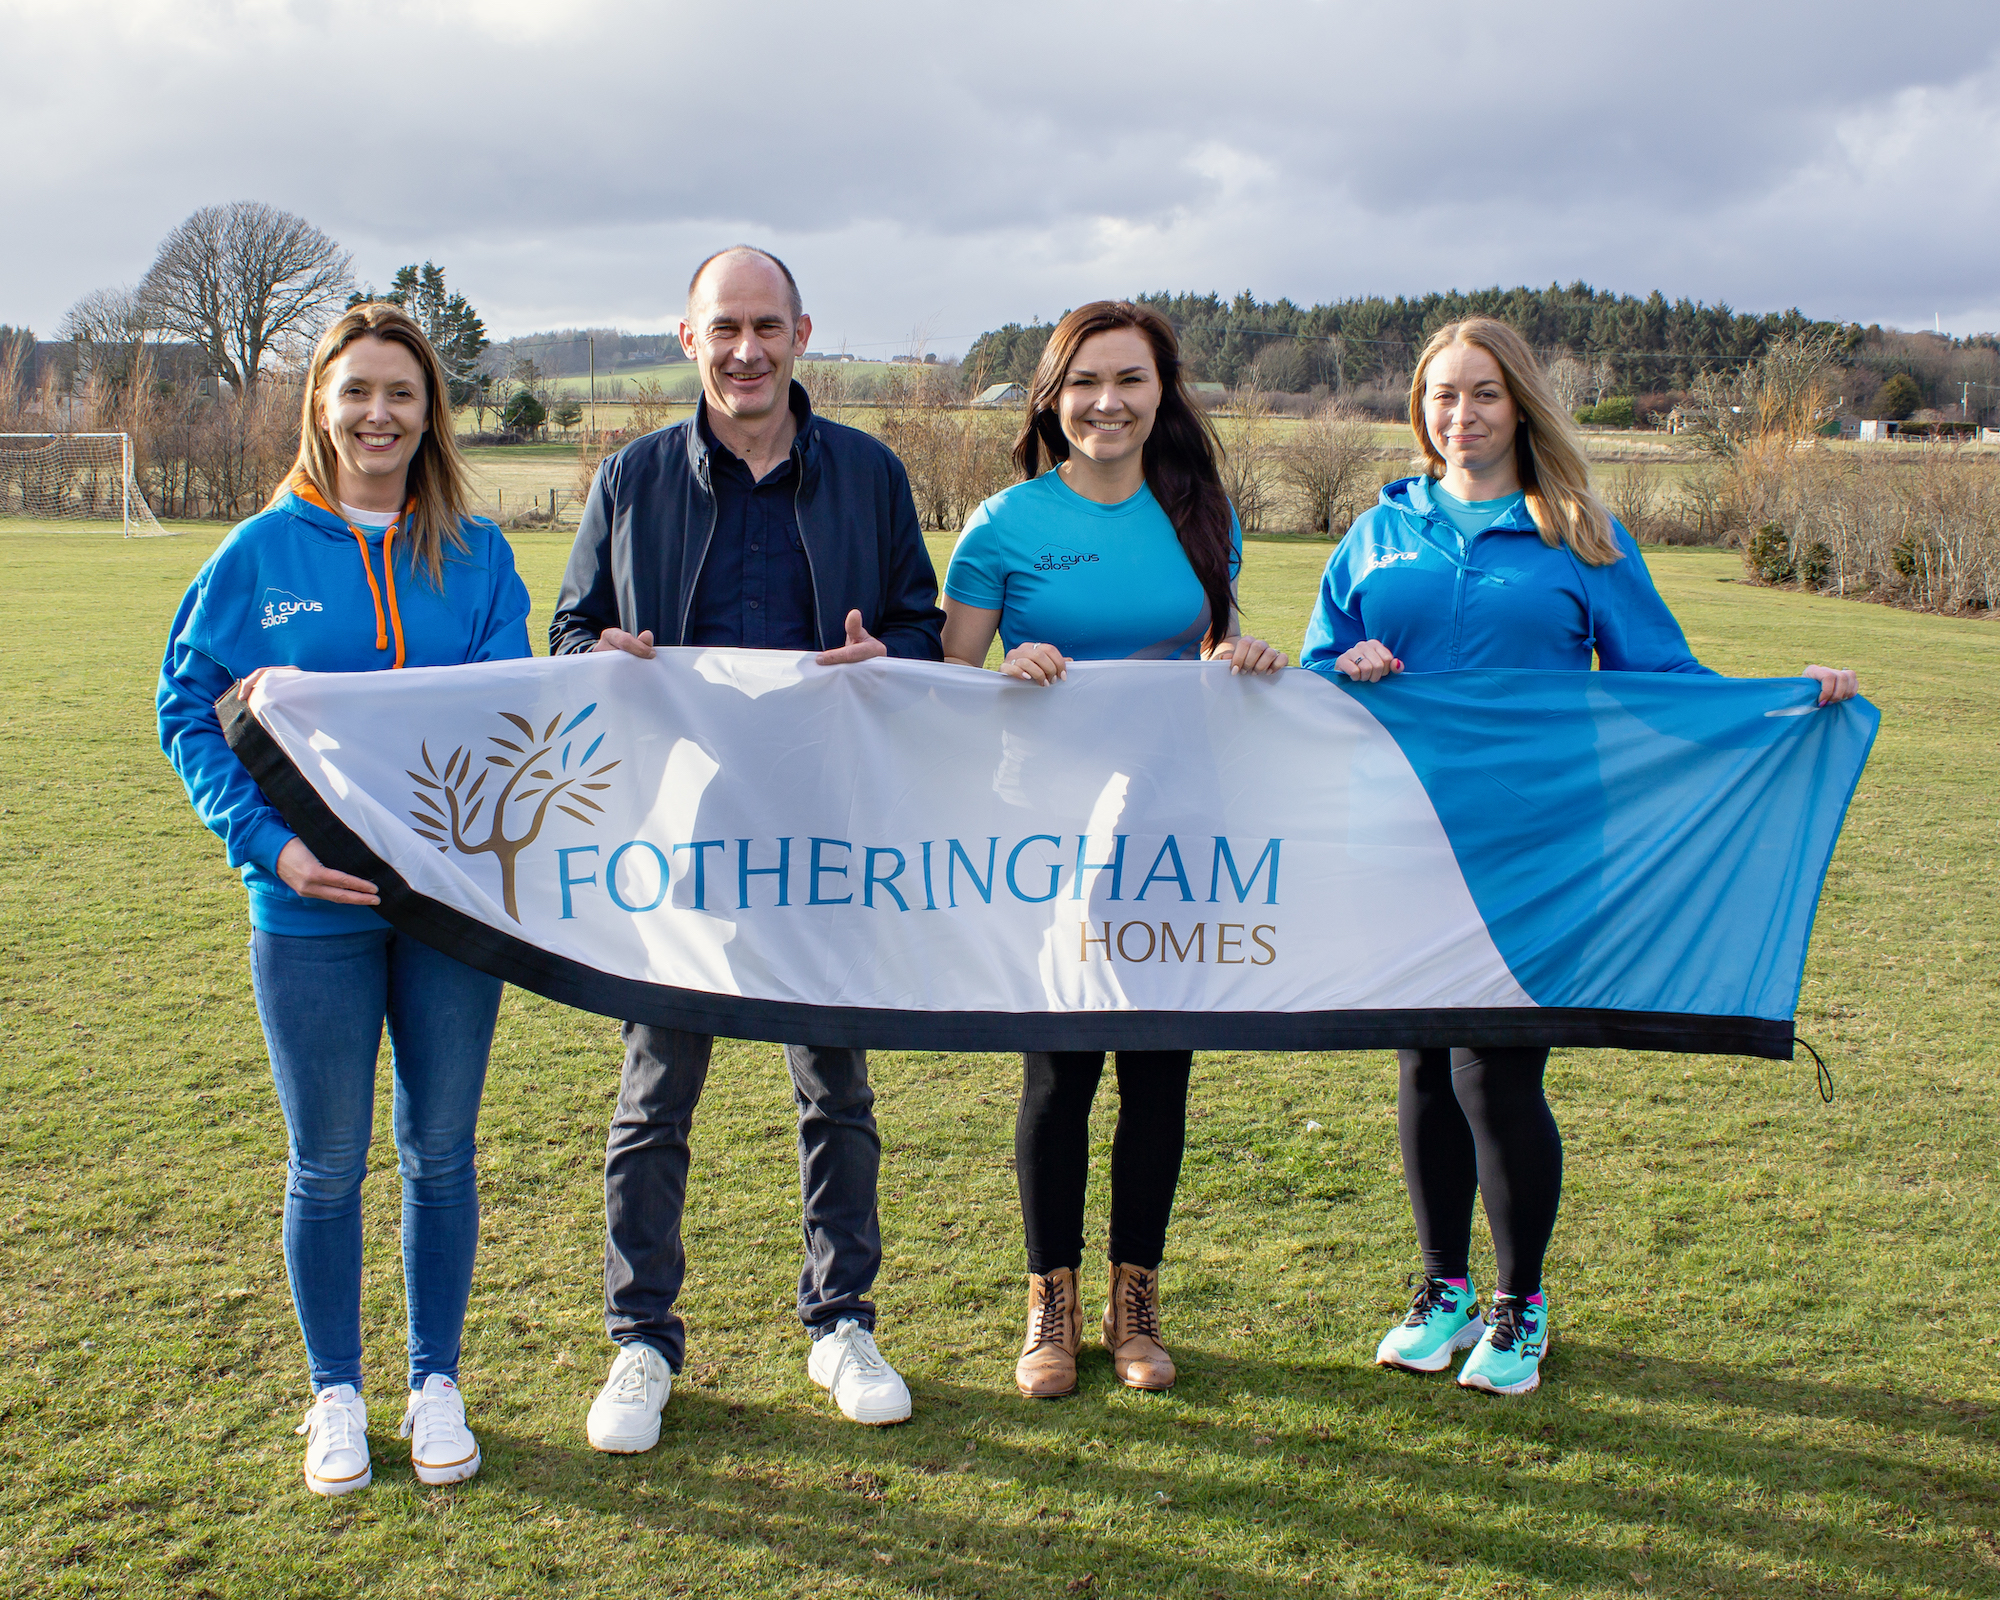 Fotheringham Homes sponsors St Cyrus 10K Run